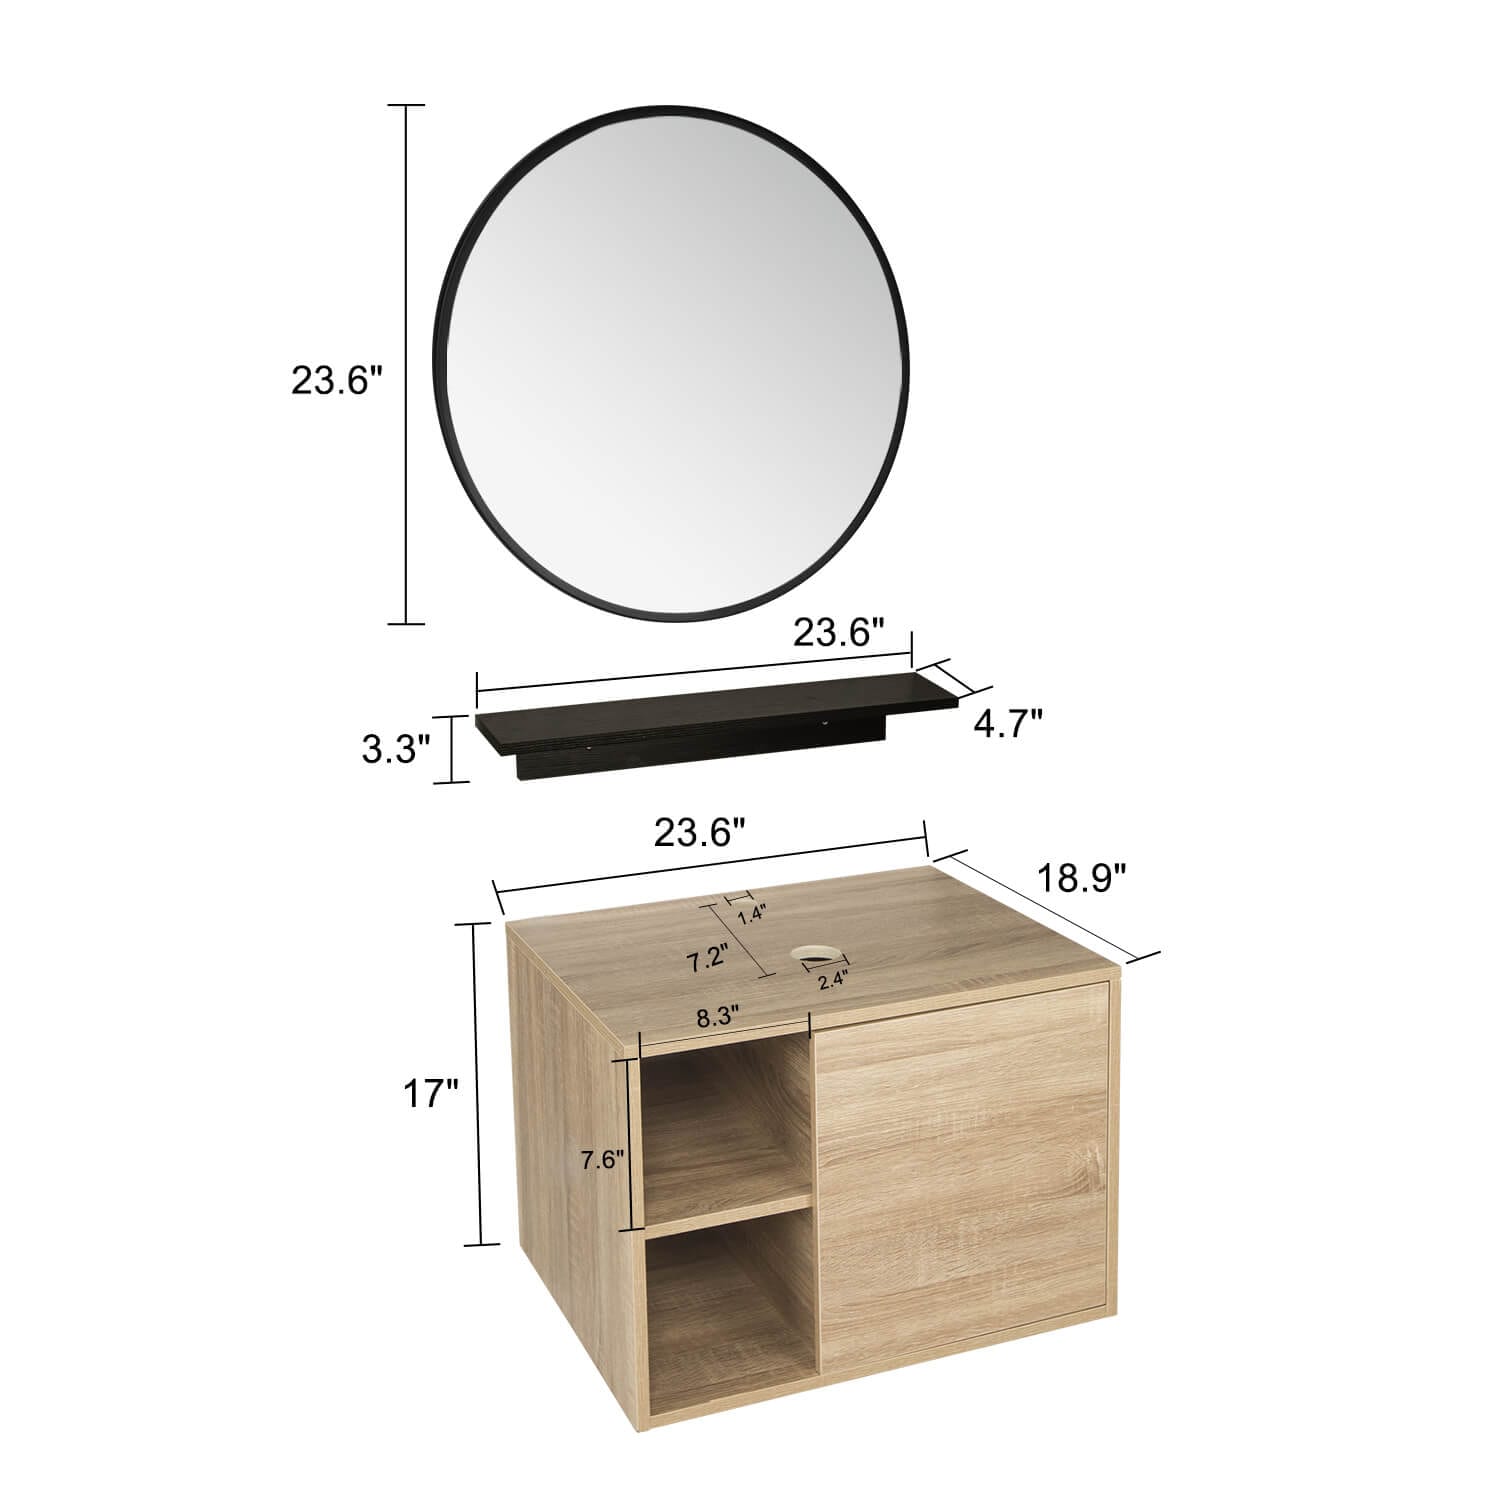 Elecwish Bathroom vanities 23.6" Modern Bathroom Vanity Cabinet With Round Mirror Wall-Mounted Side Shelf size